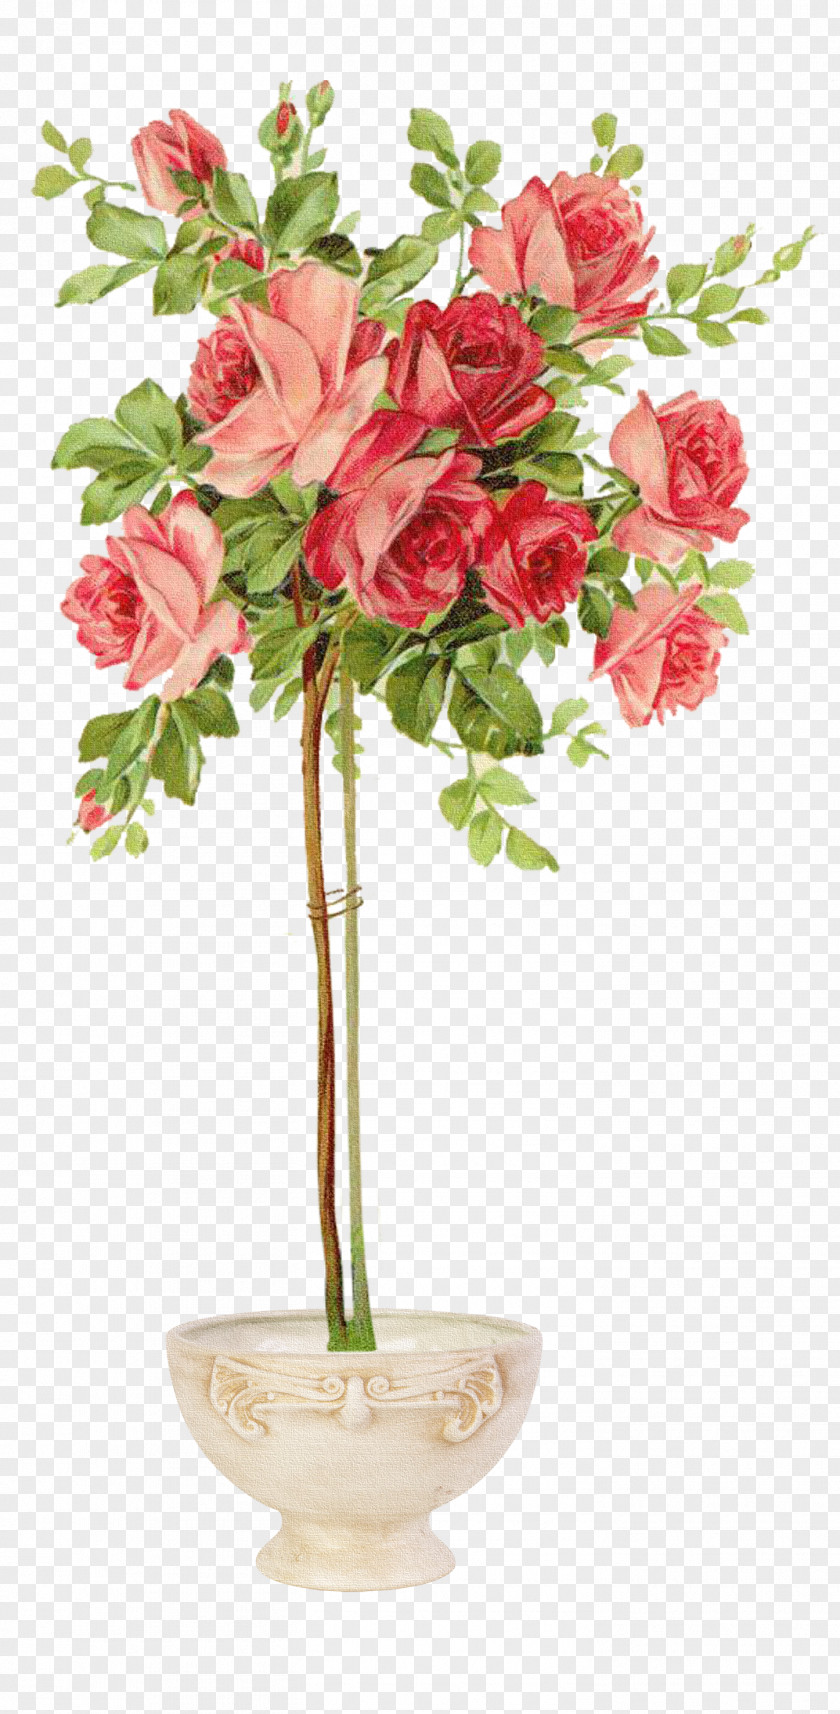 Flower Pot Vintage Clothing Rose Shabby Chic Easter Postcard PNG